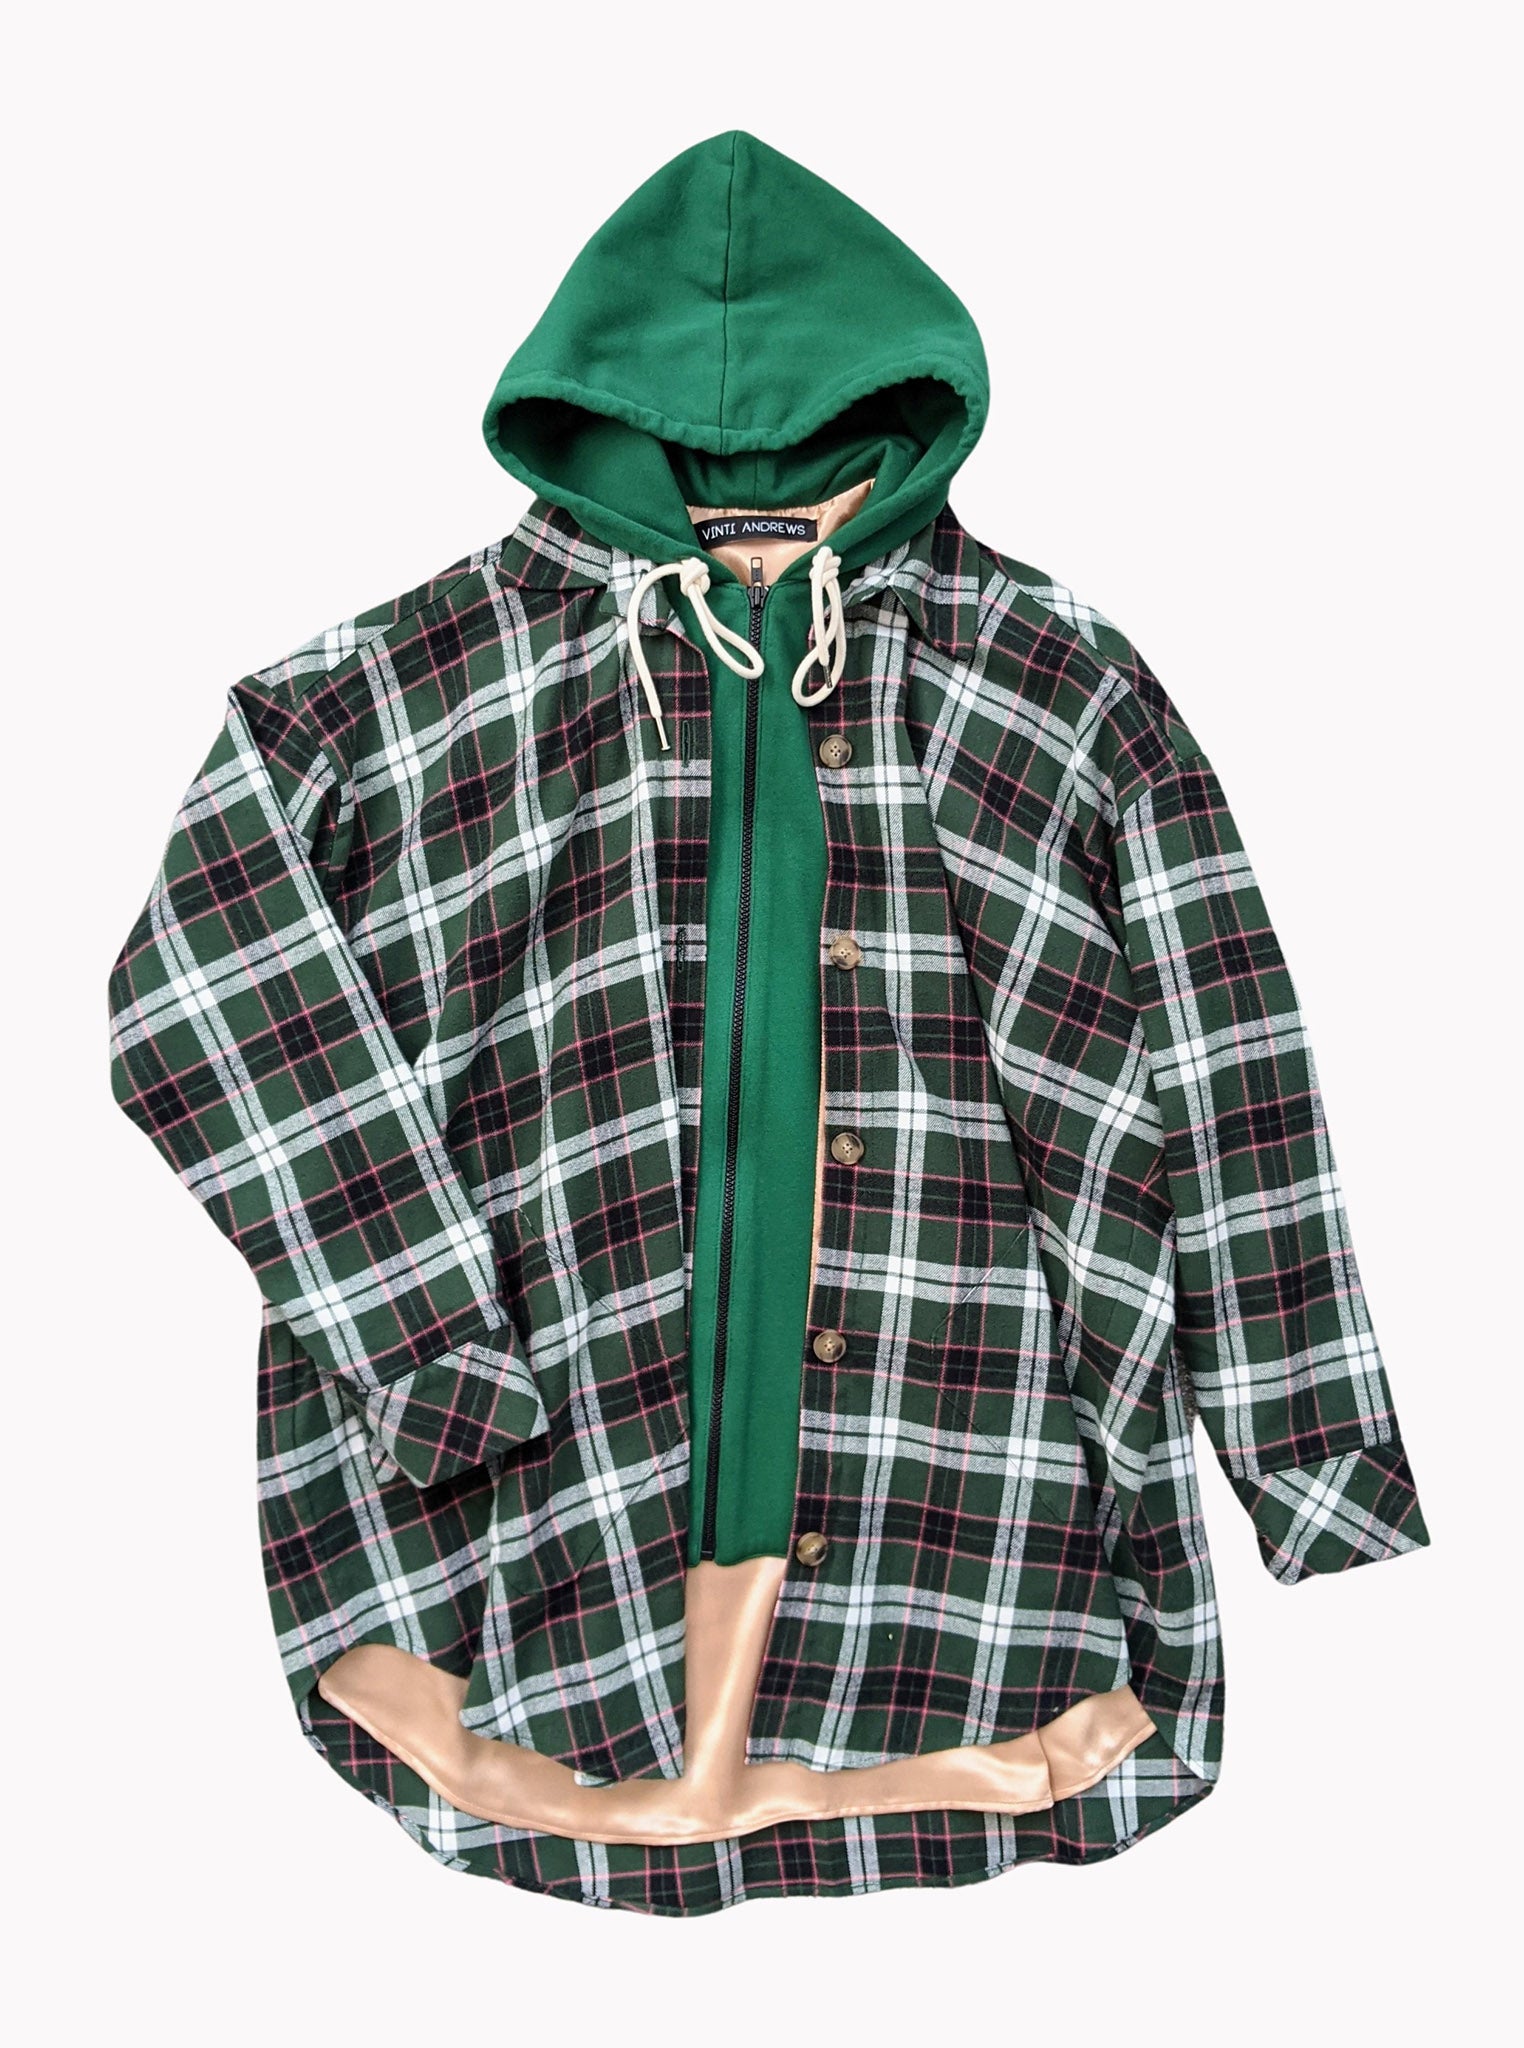 Vinti Andrews Oversize Shirt Jacket with Hood Green Plaid